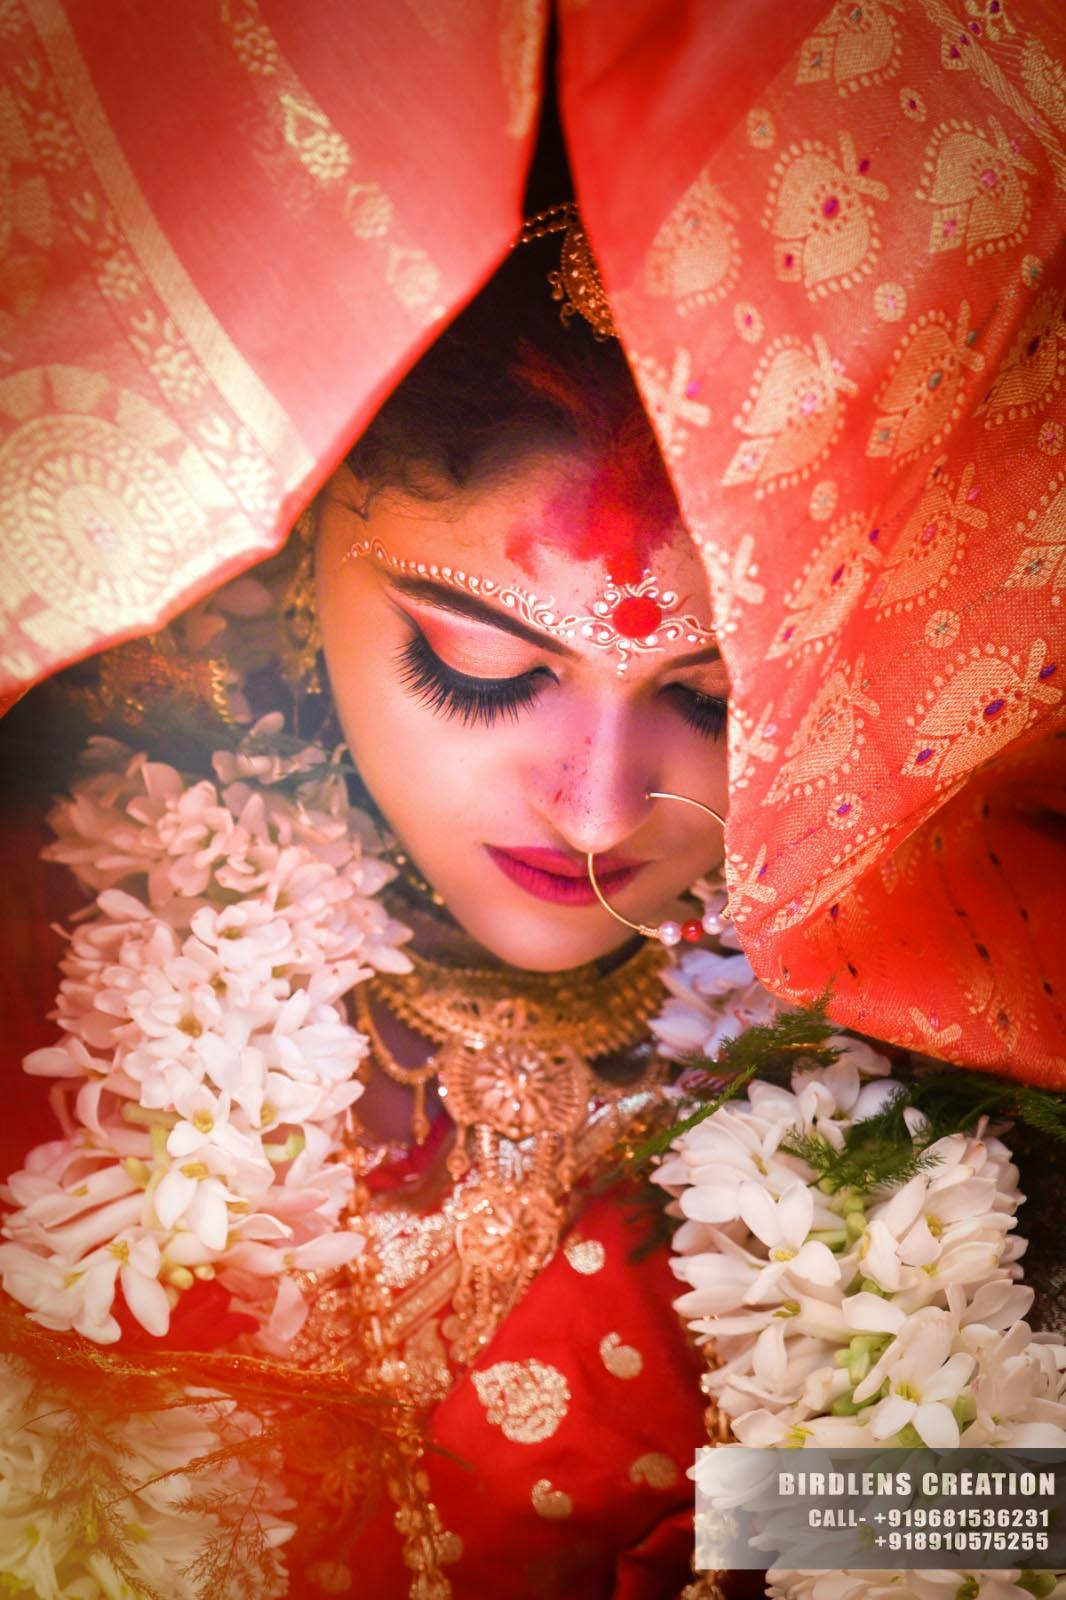 Photographers in kolkata for wedding